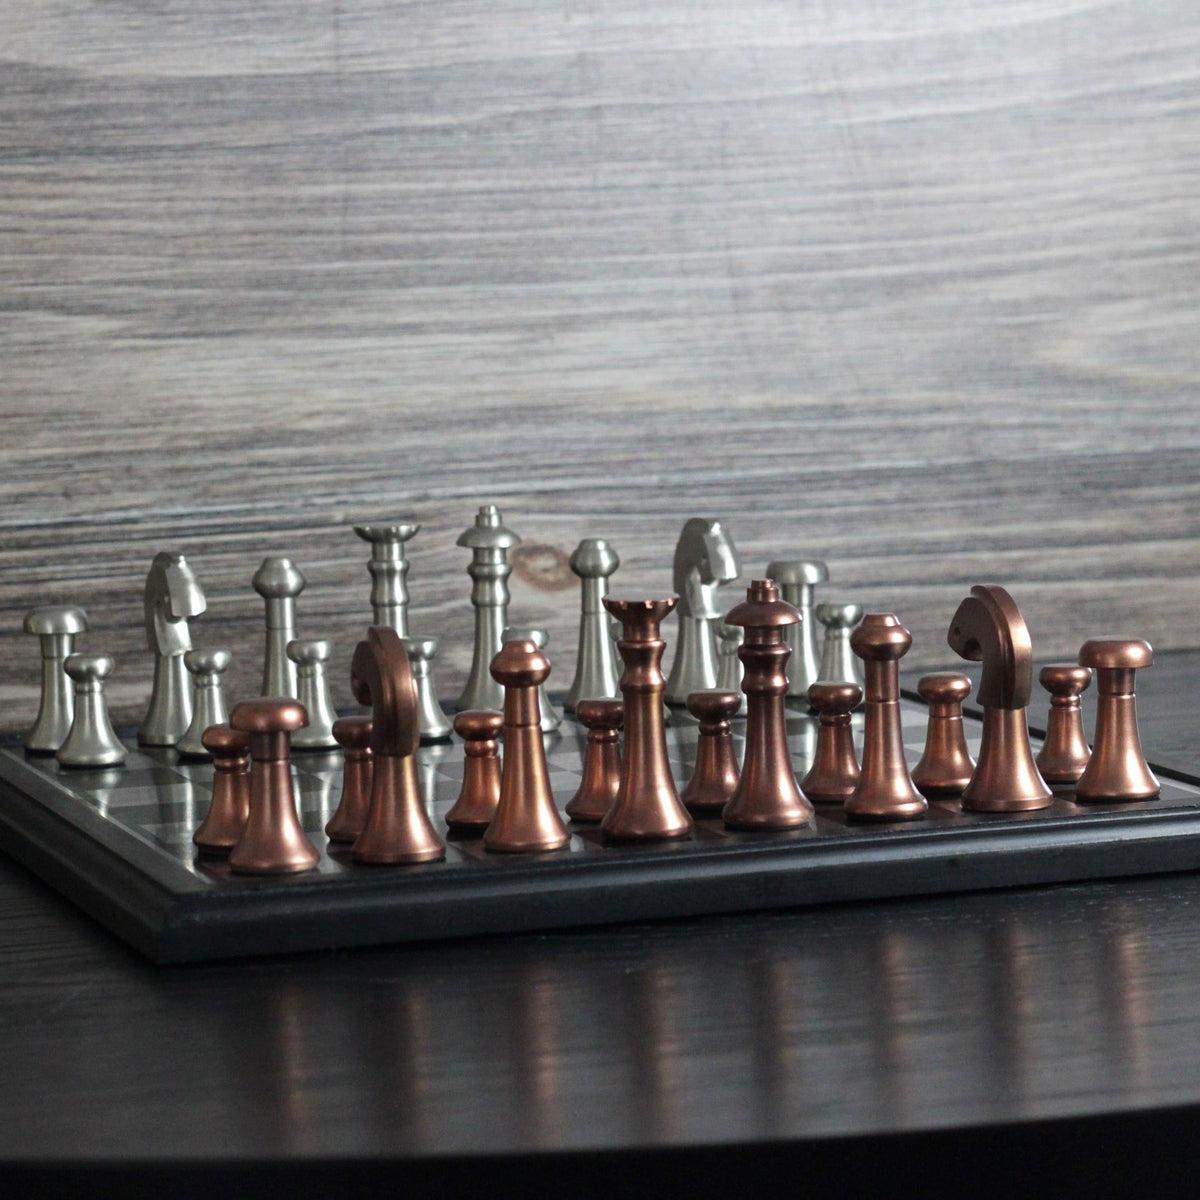  Designer Chess Set - Luxurious and Modern Acrylic